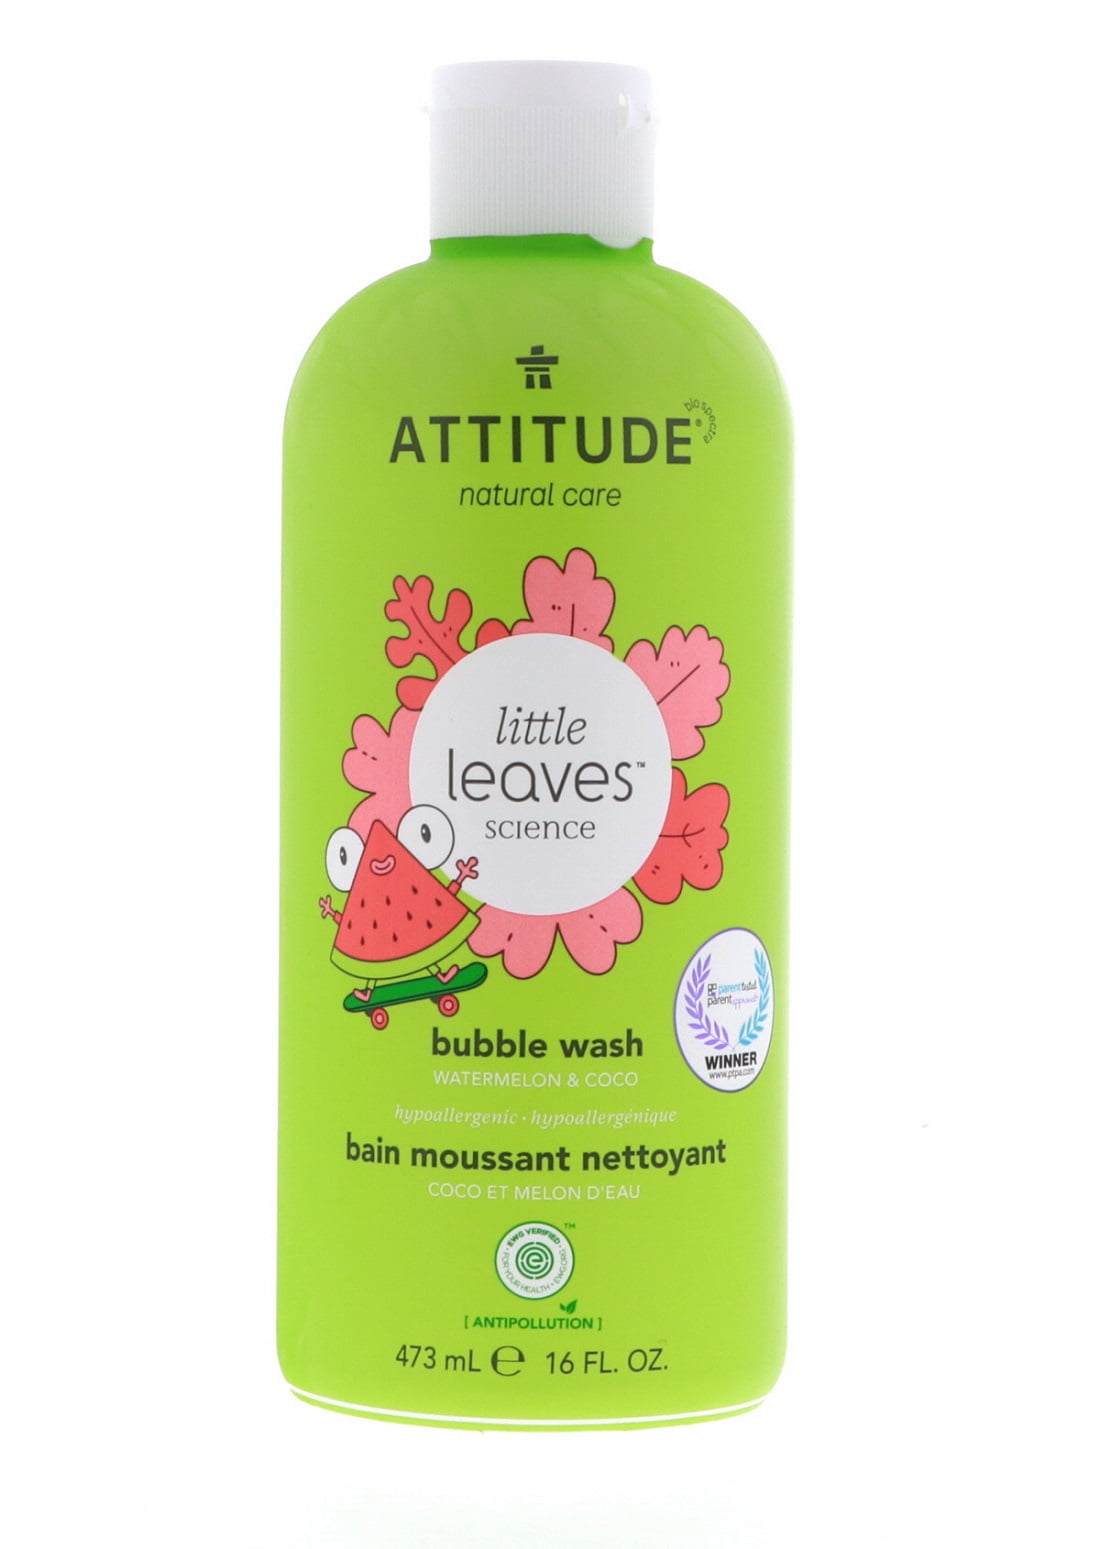 Attitude Little Leaves Watermelon & Coco Hypoallergenic & Natural Bubble Wash Bottle